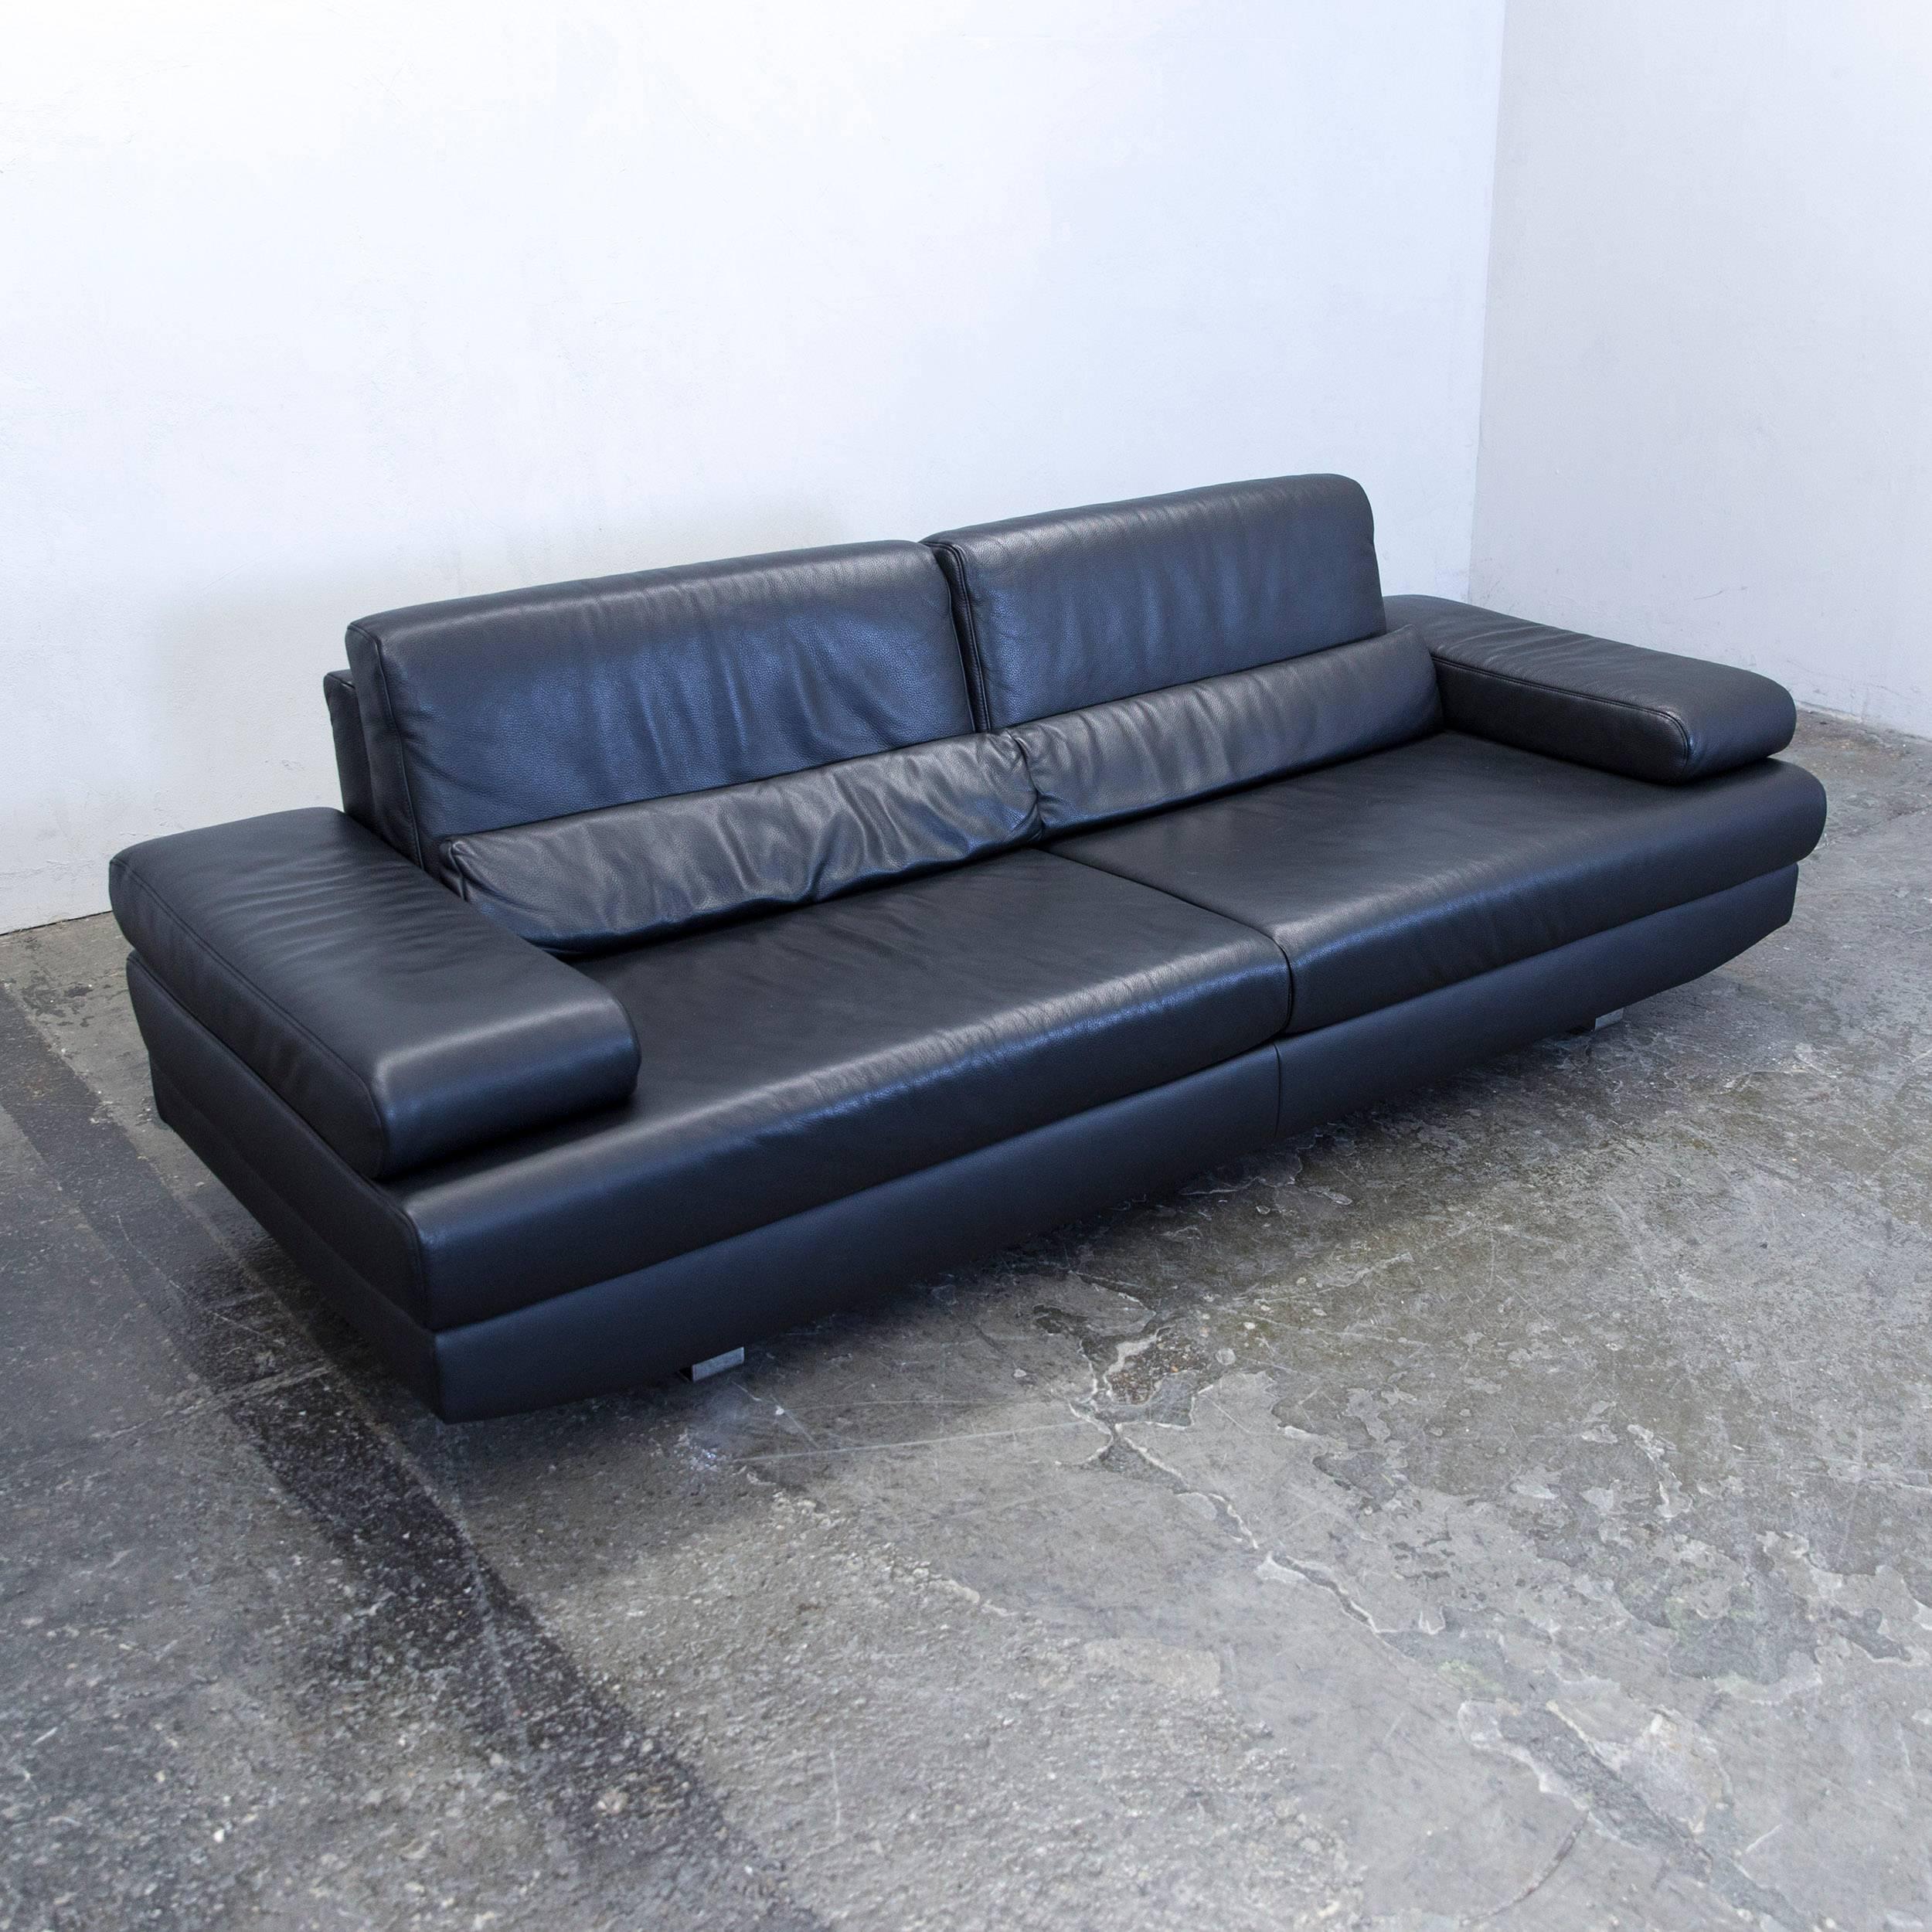 Black colored original Ewald Schillig Harry designer leather sofa, in a minimalistic and modern design, made for pure comfort.